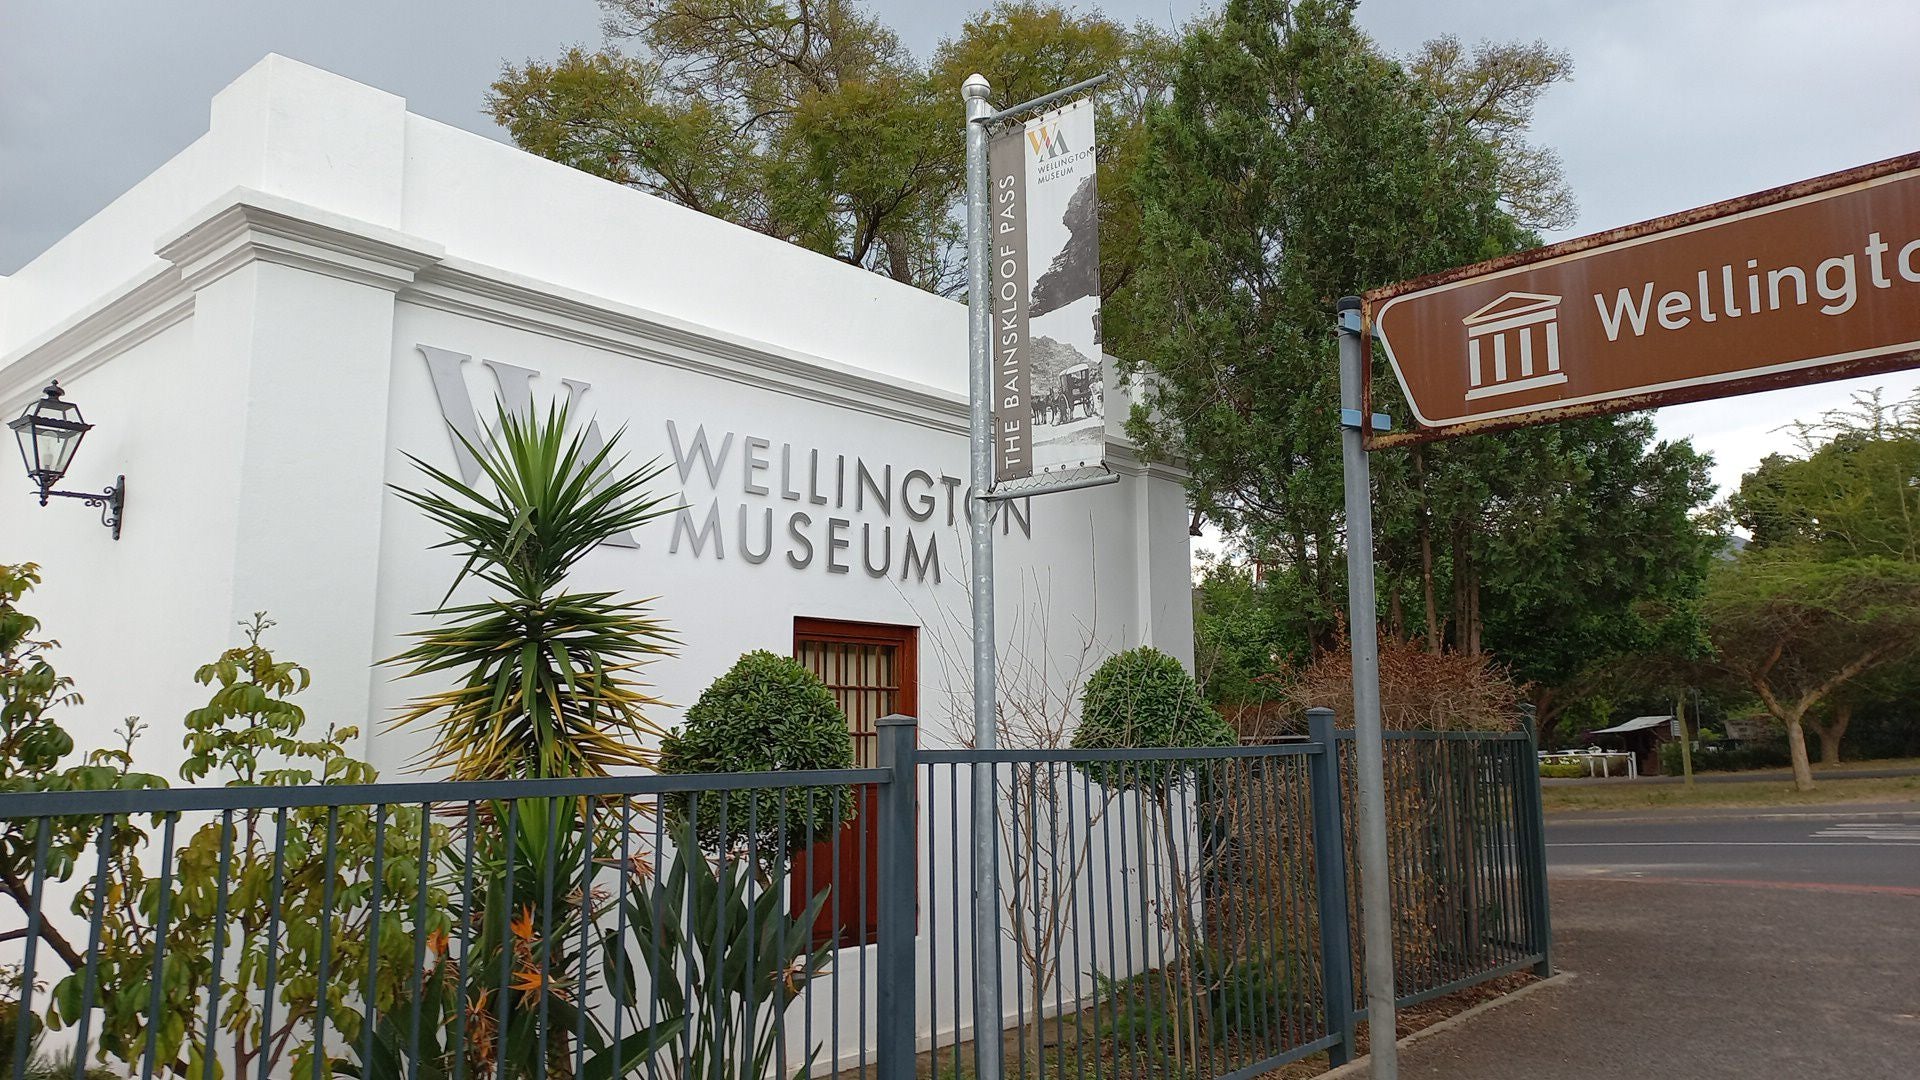  Wellington Museum